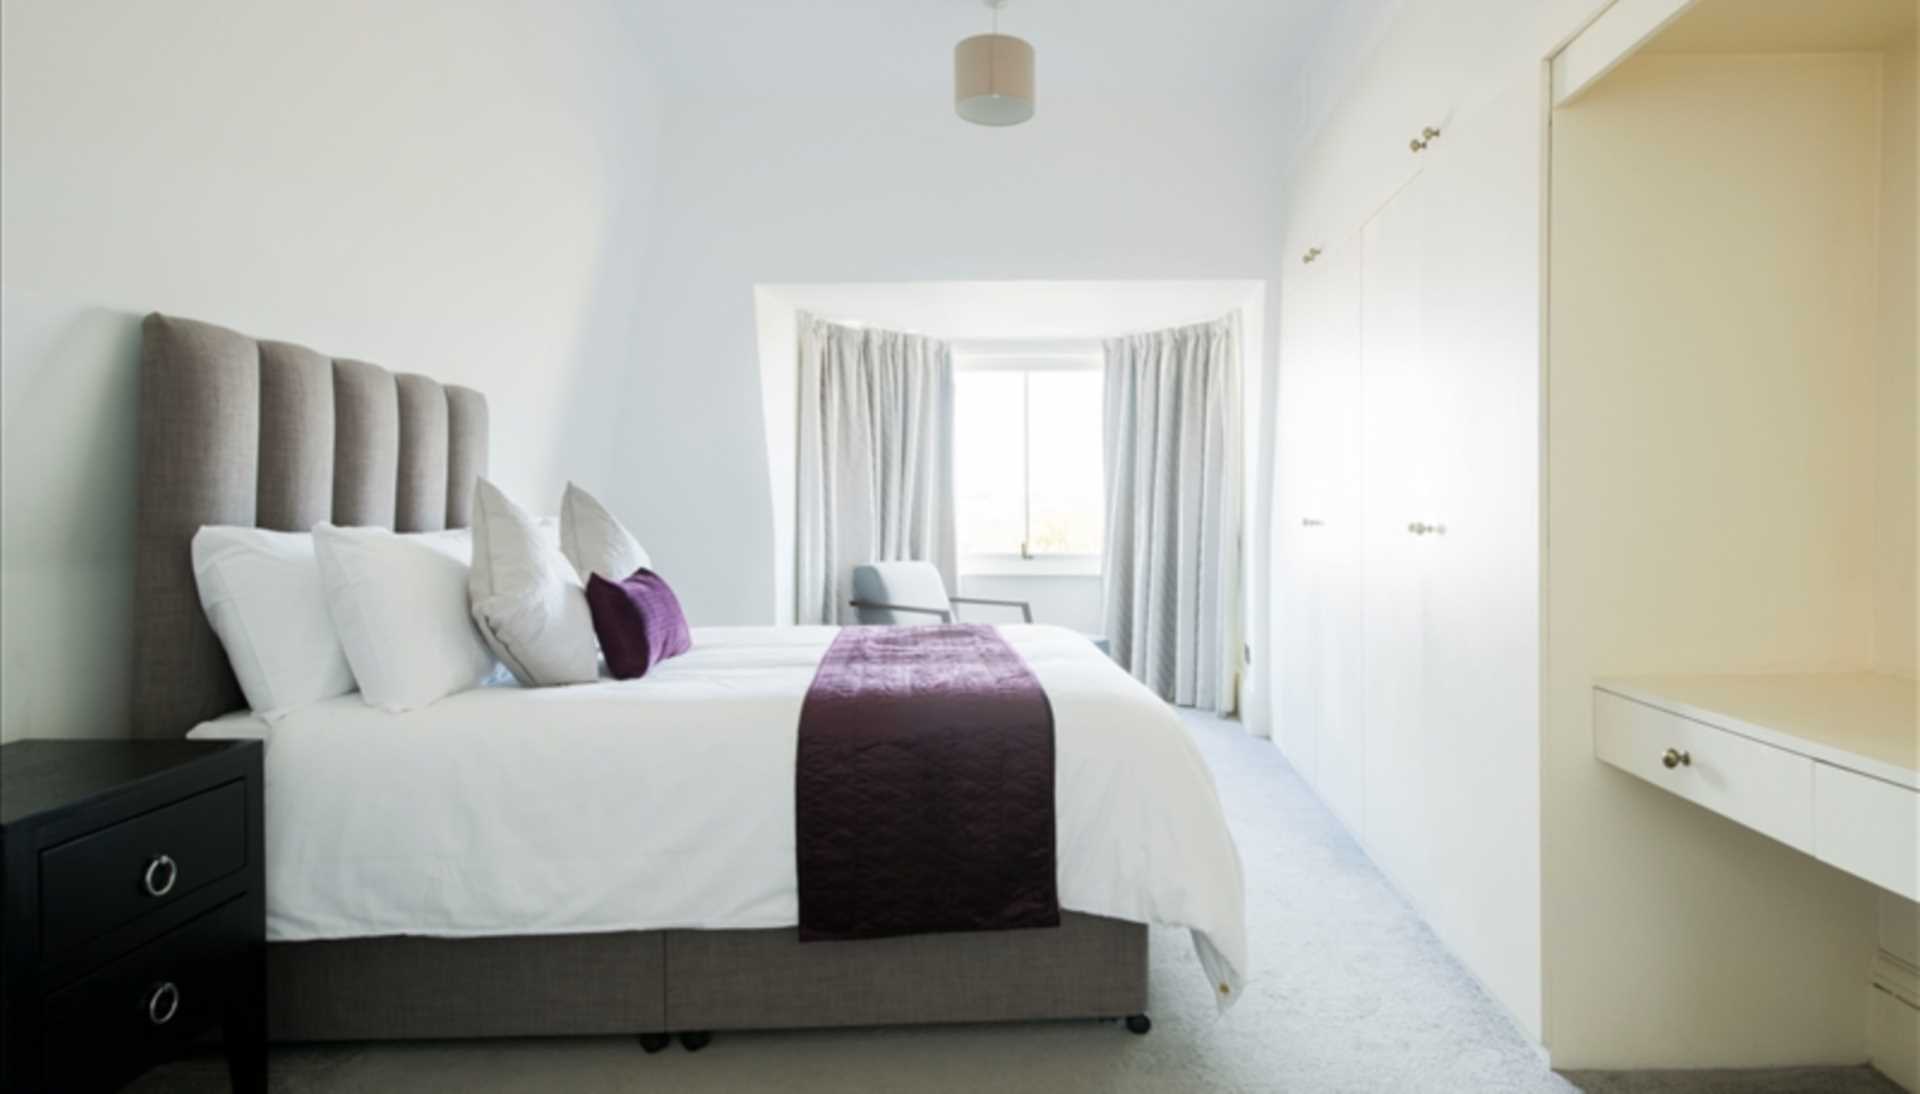 London NW8 7HY 5 bed penthouse rental property internal/external image-5